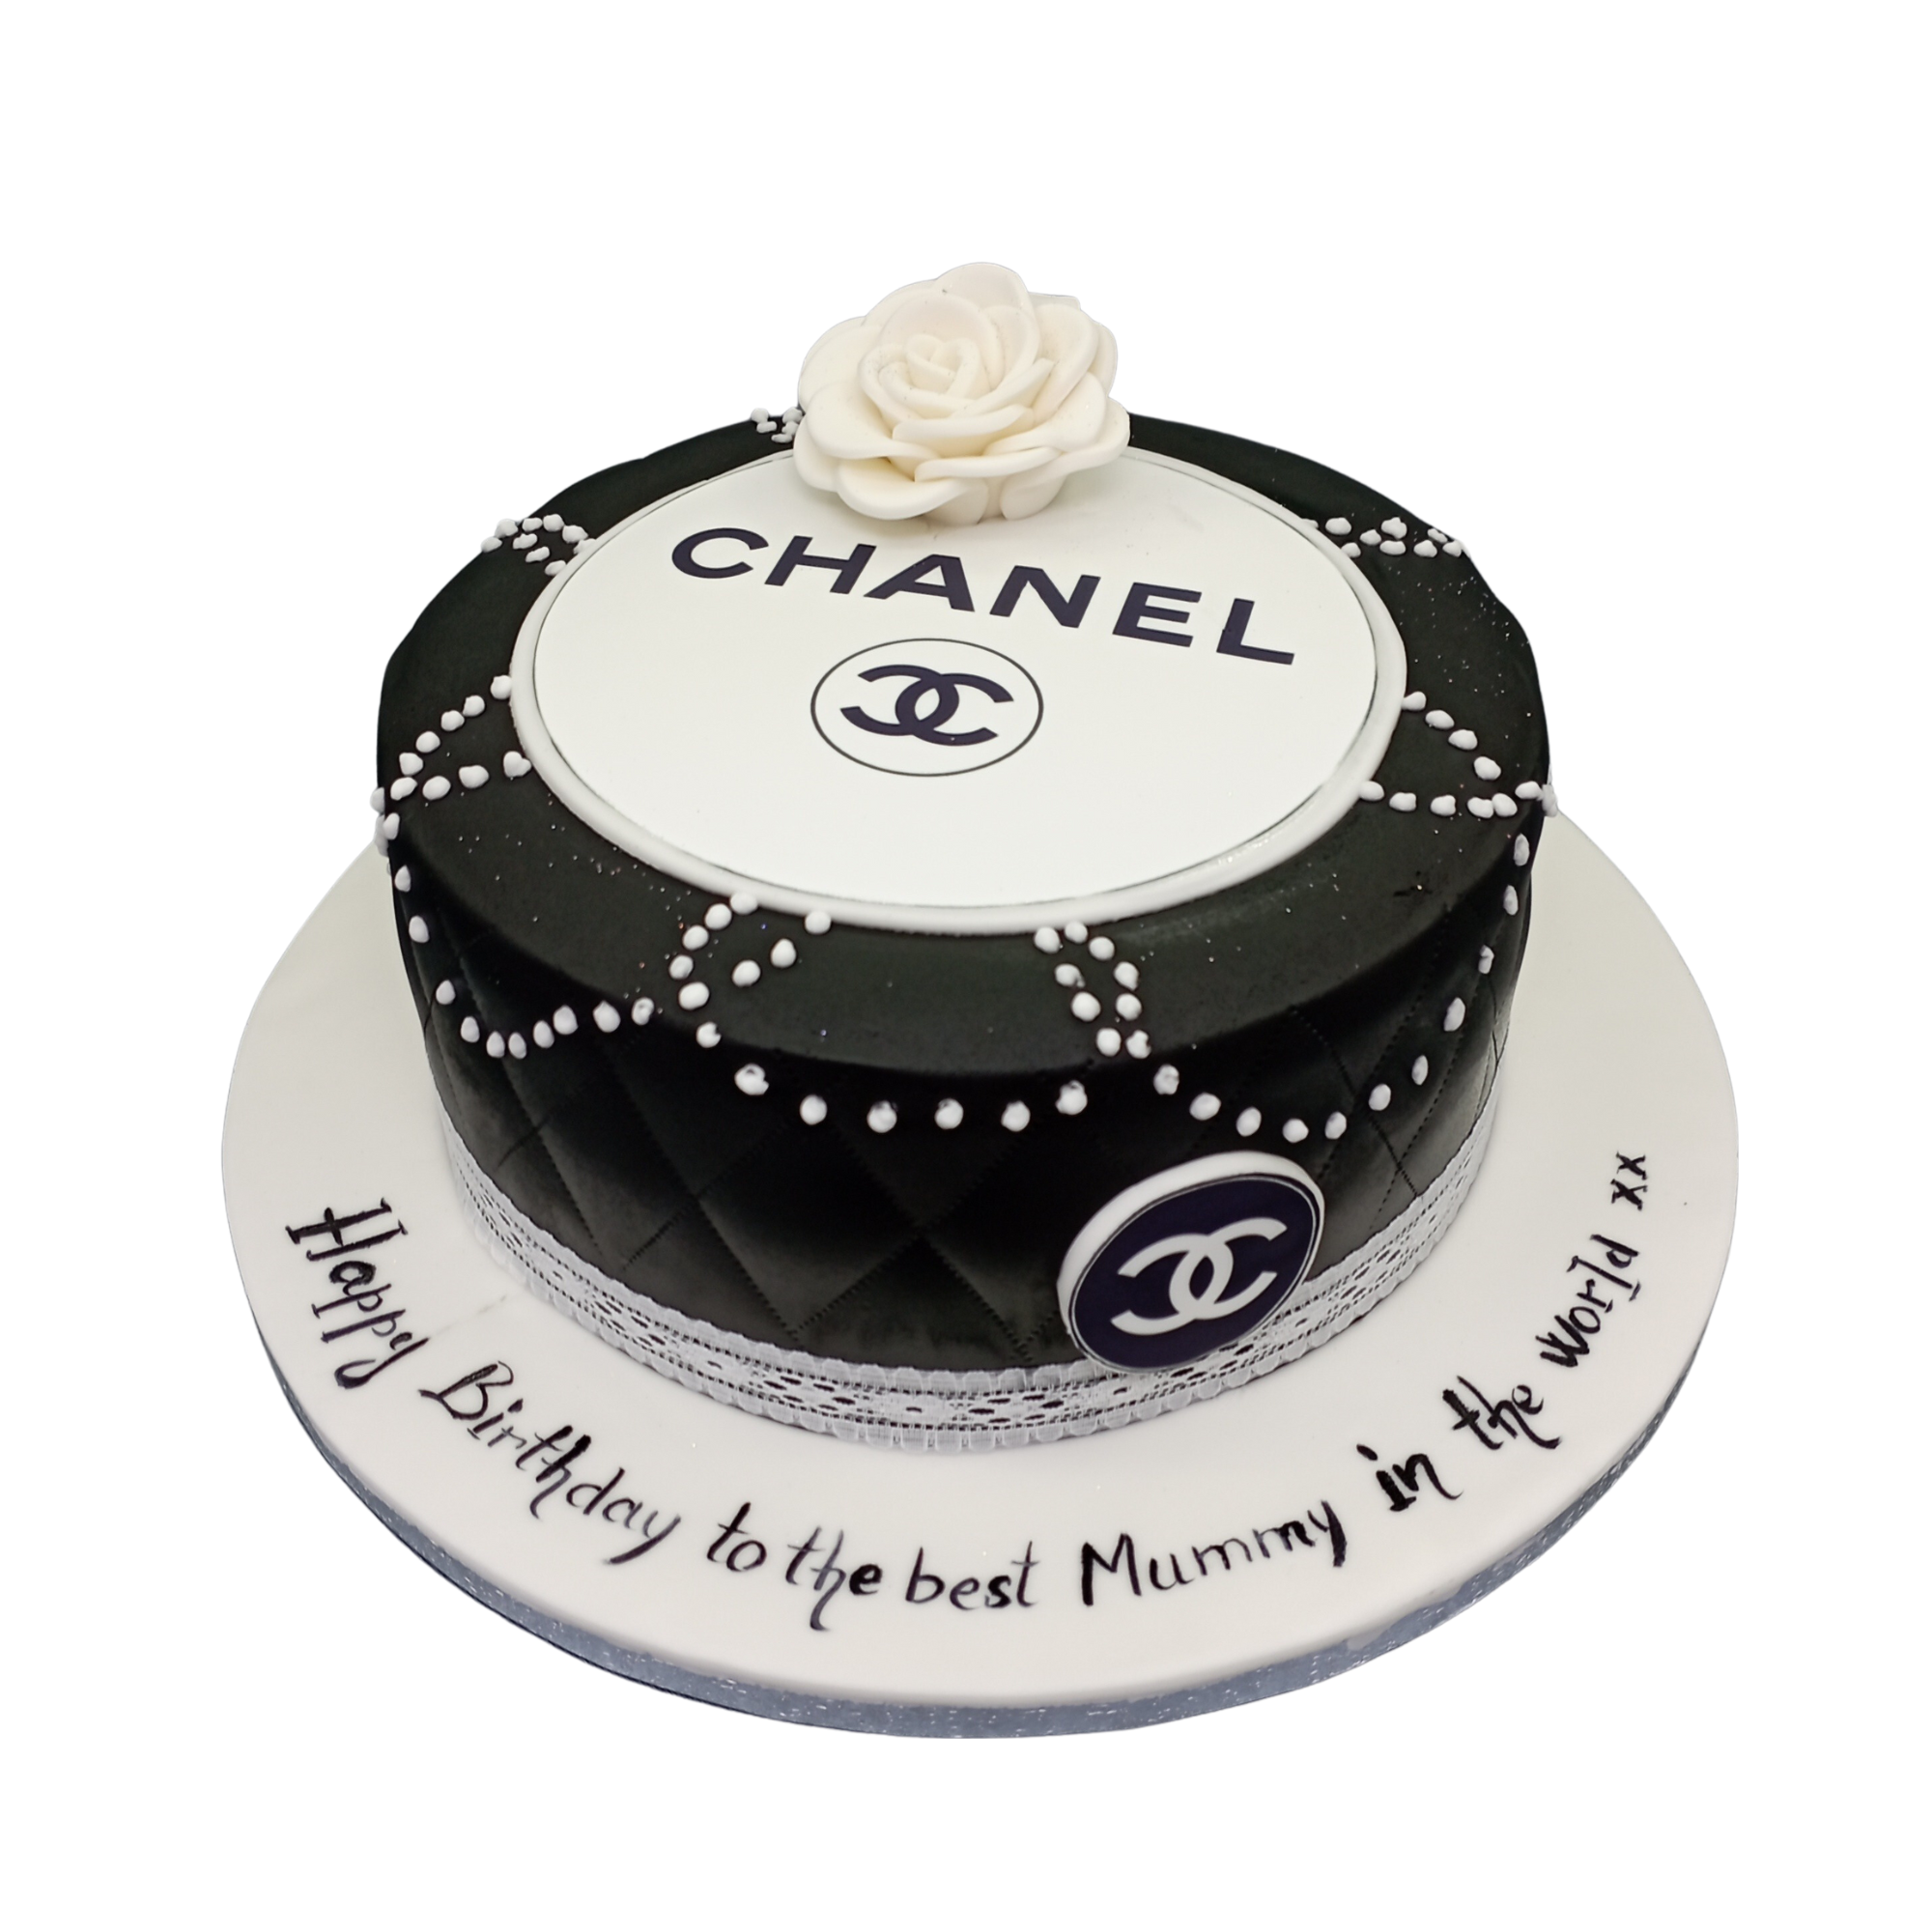 Chanel Birthday Cake 